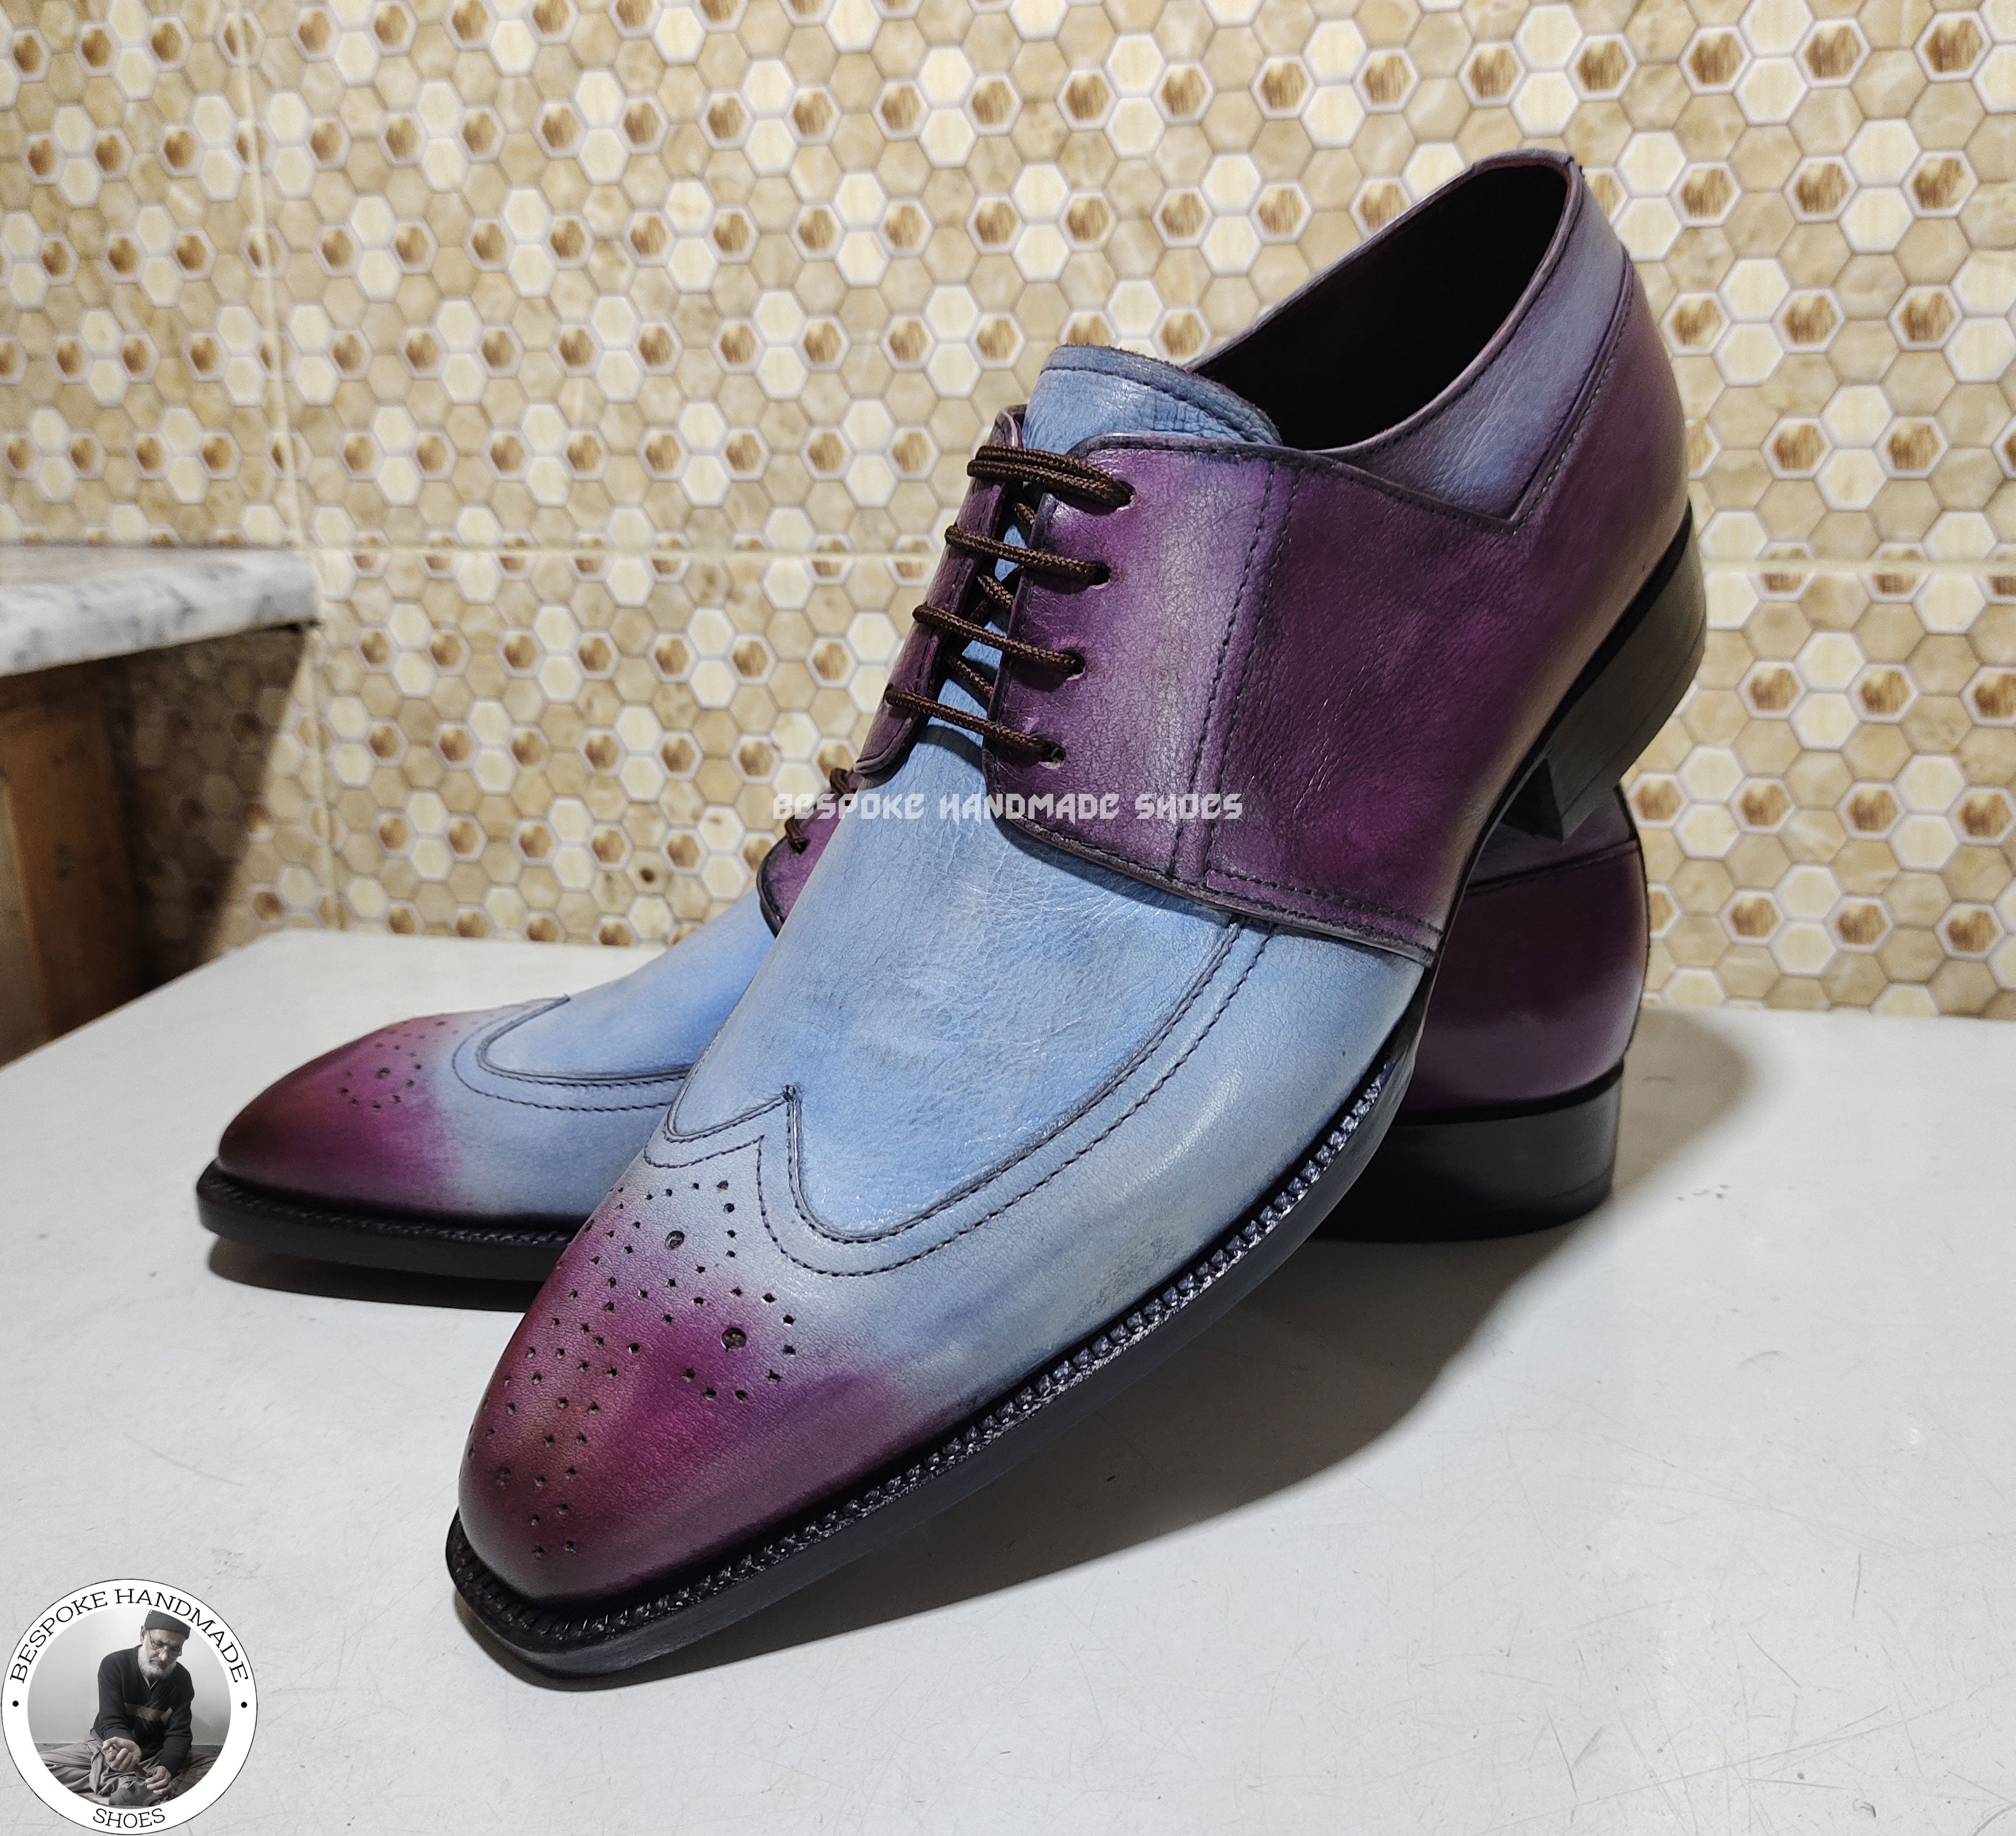 Bespoke Handmade Shoes, Hand Painted Blue & Purple Pure Leather Brogue Derby Formal Shoe